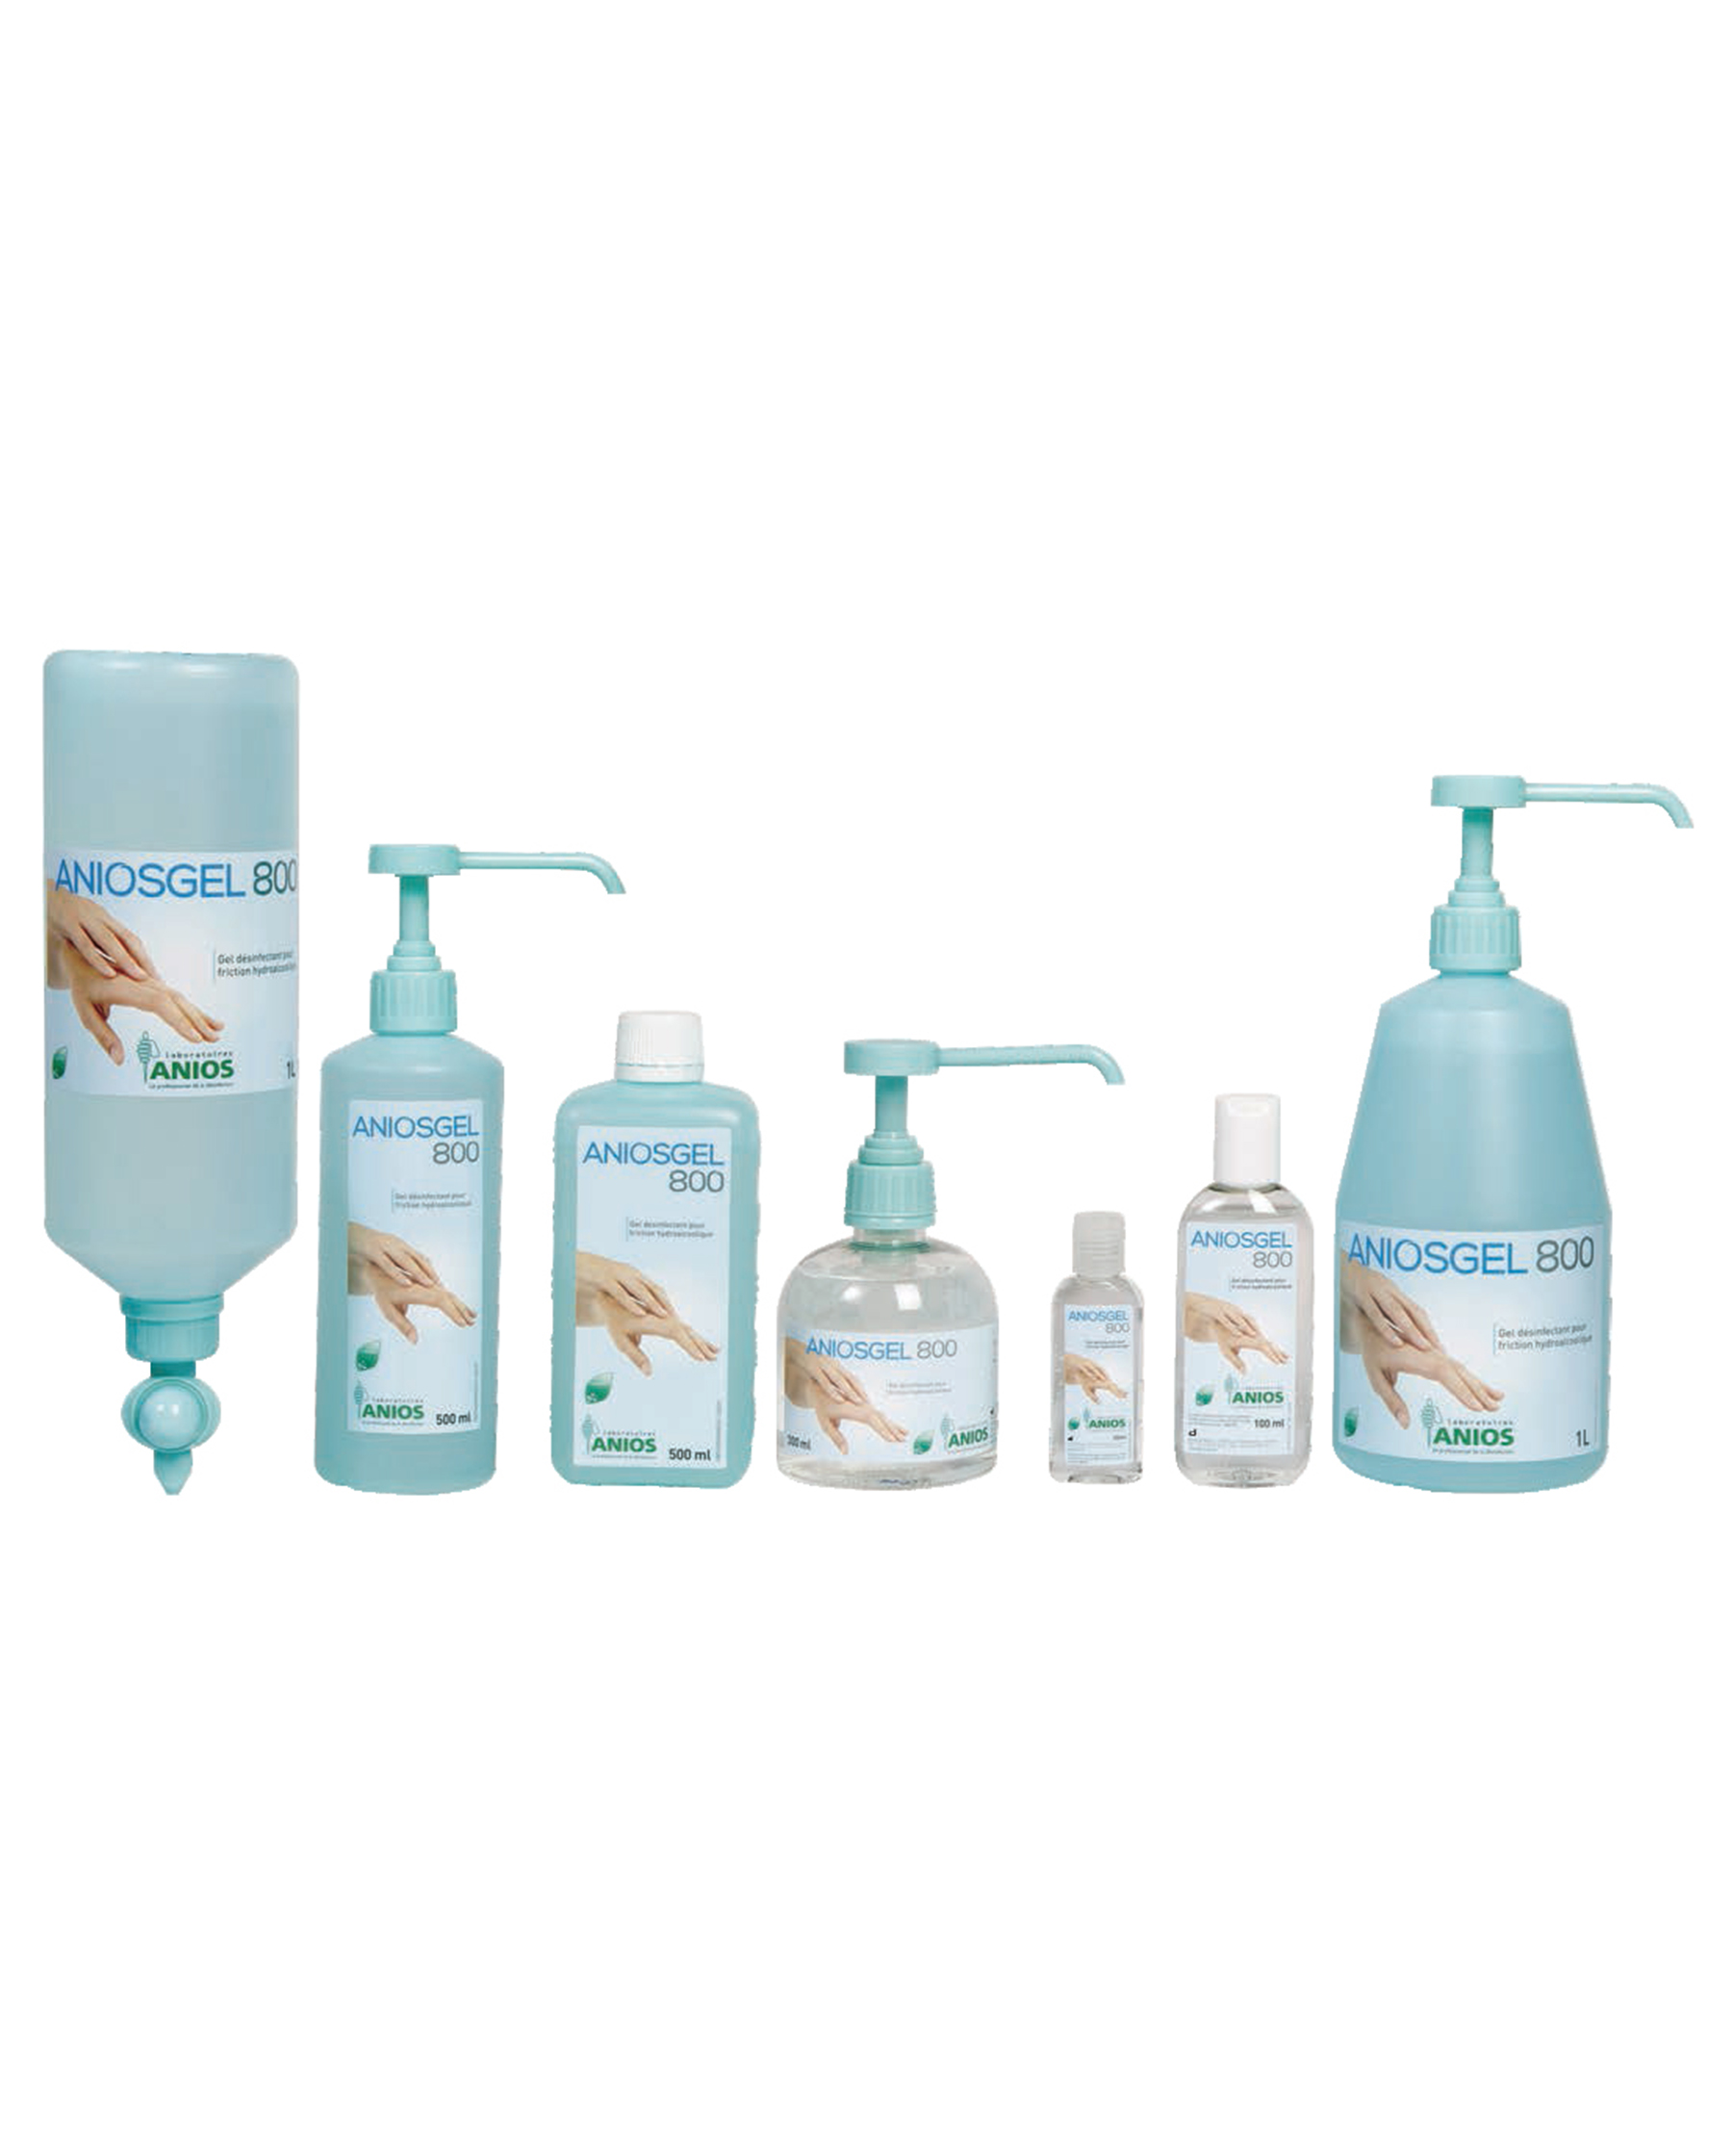 Aniosgel 800 Disinfectant Gel - Medsurge Healthcare Limited